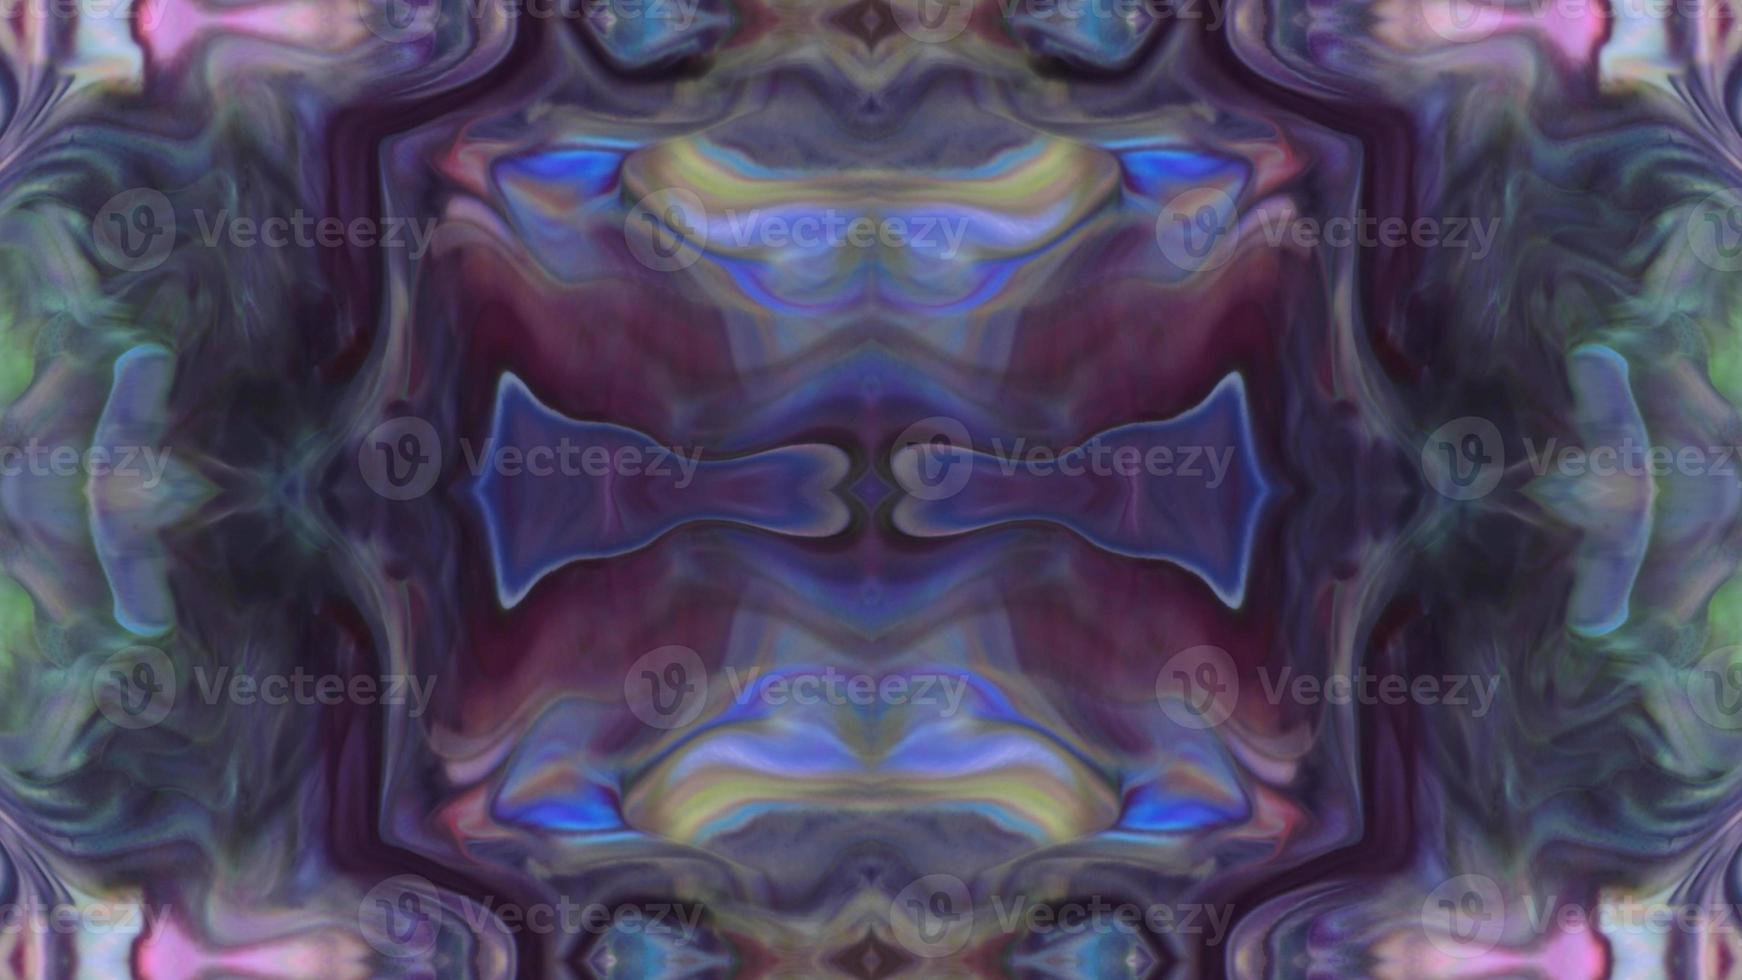 abstrakt färger kalejdoskop bakgrund textur foto